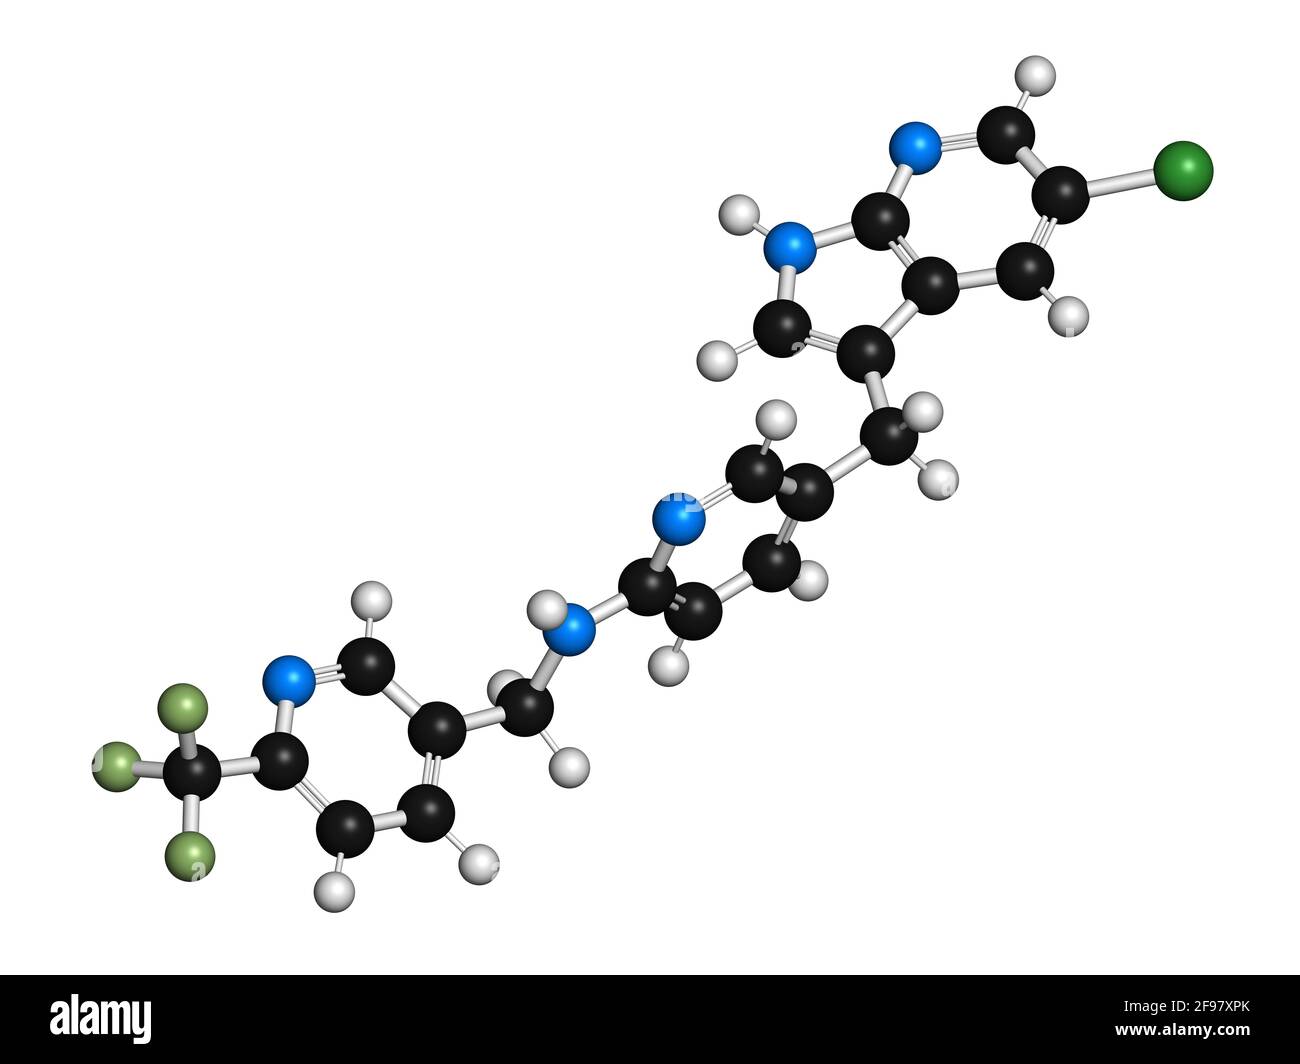 Pexidartinib cancer drug molecule, illustration Stock Photo